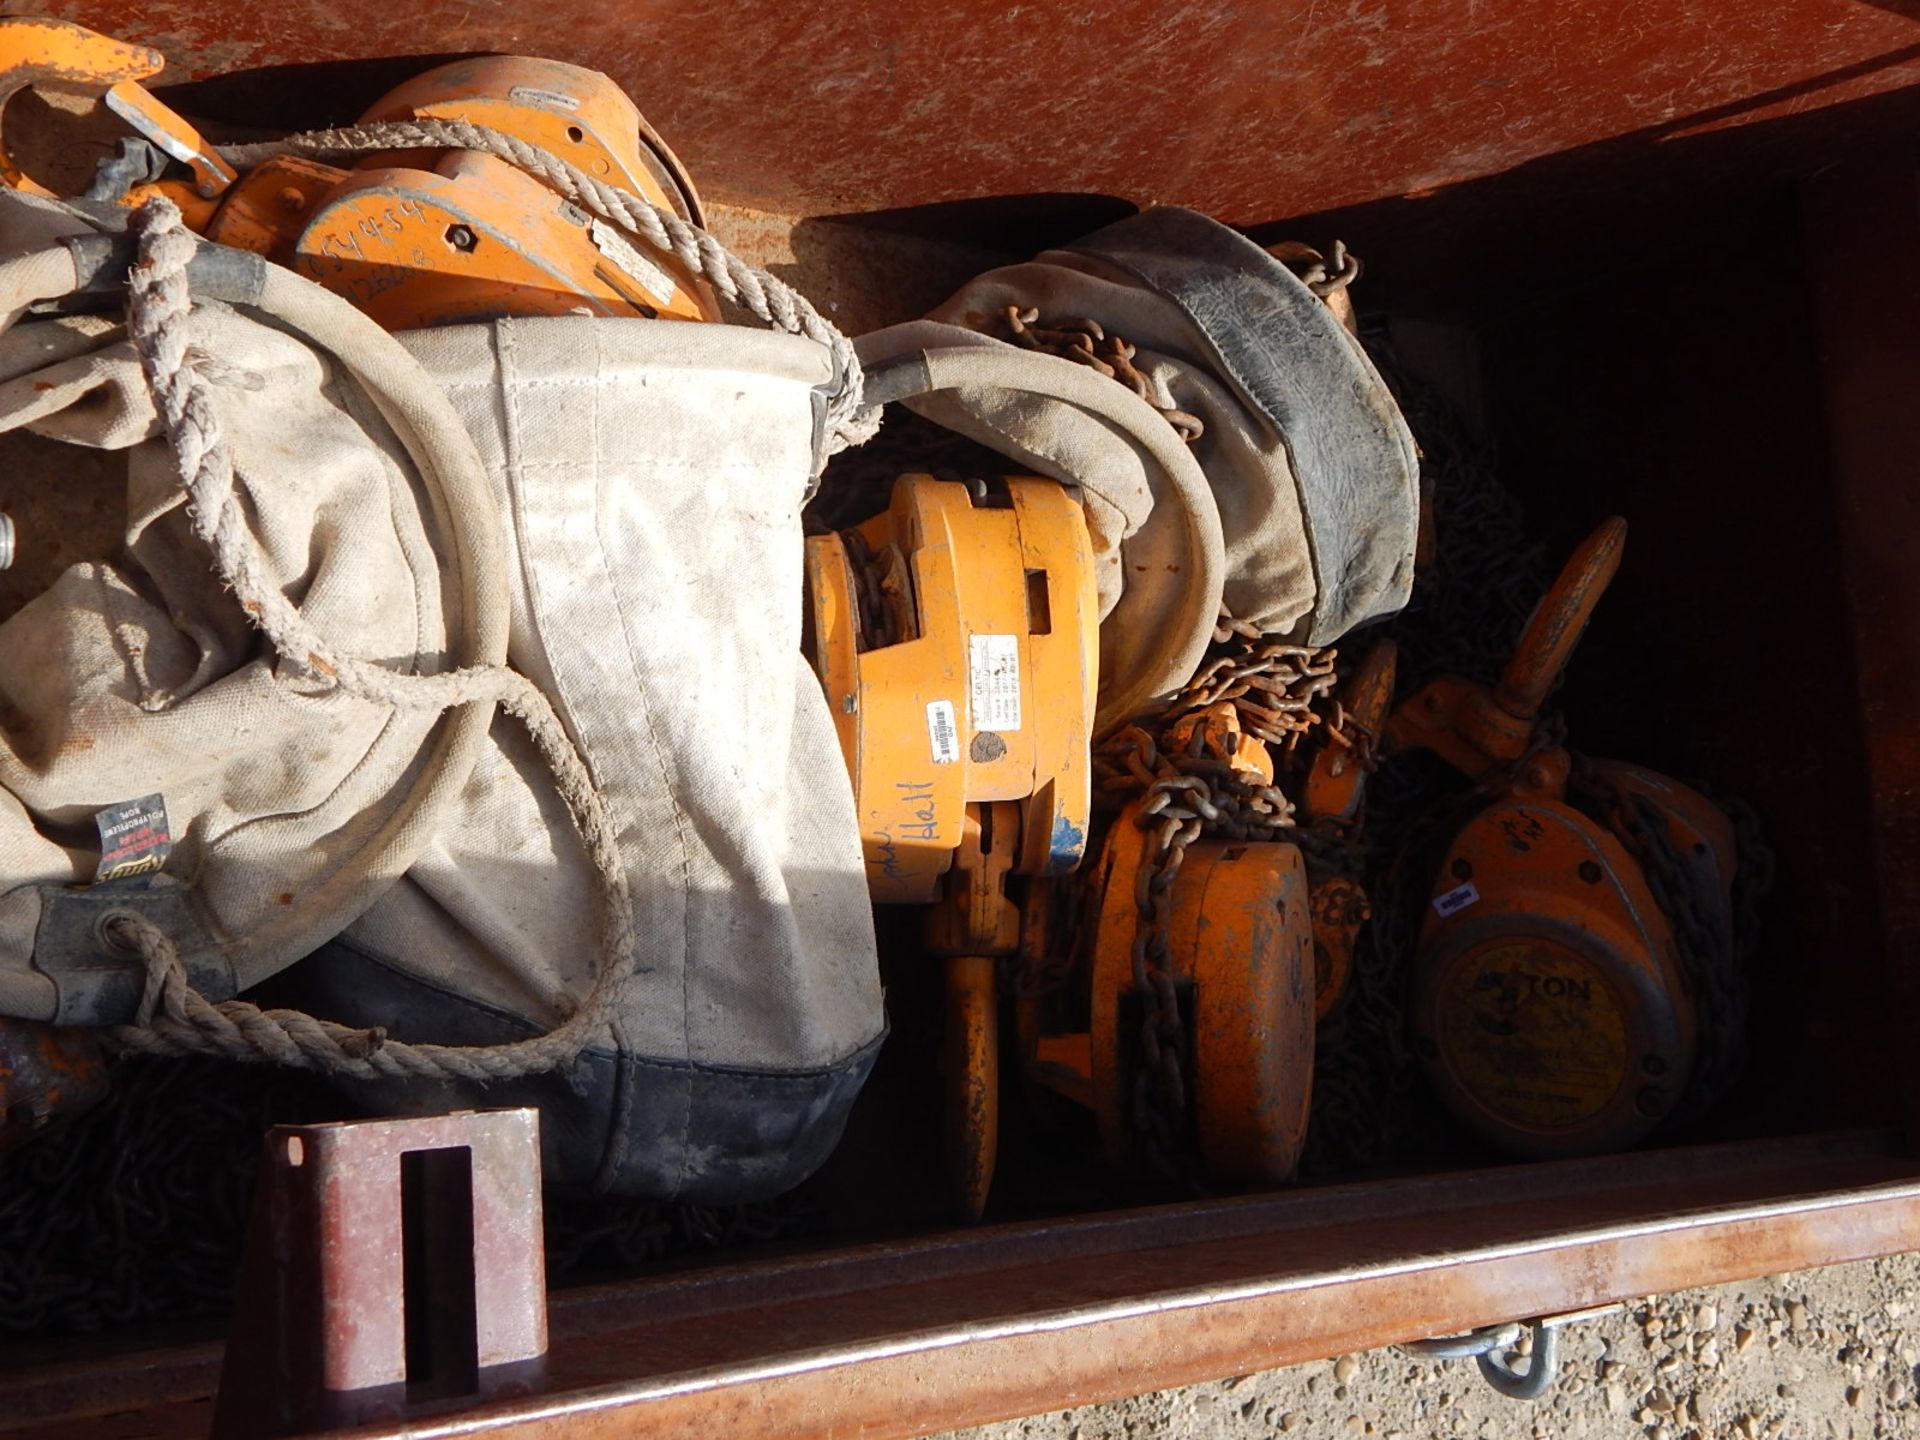 LOT/ JOB BOX WITH CONTENTS CONSISTING OF KITO CHAIN FALLS AND KUNY BAGS - Image 2 of 2